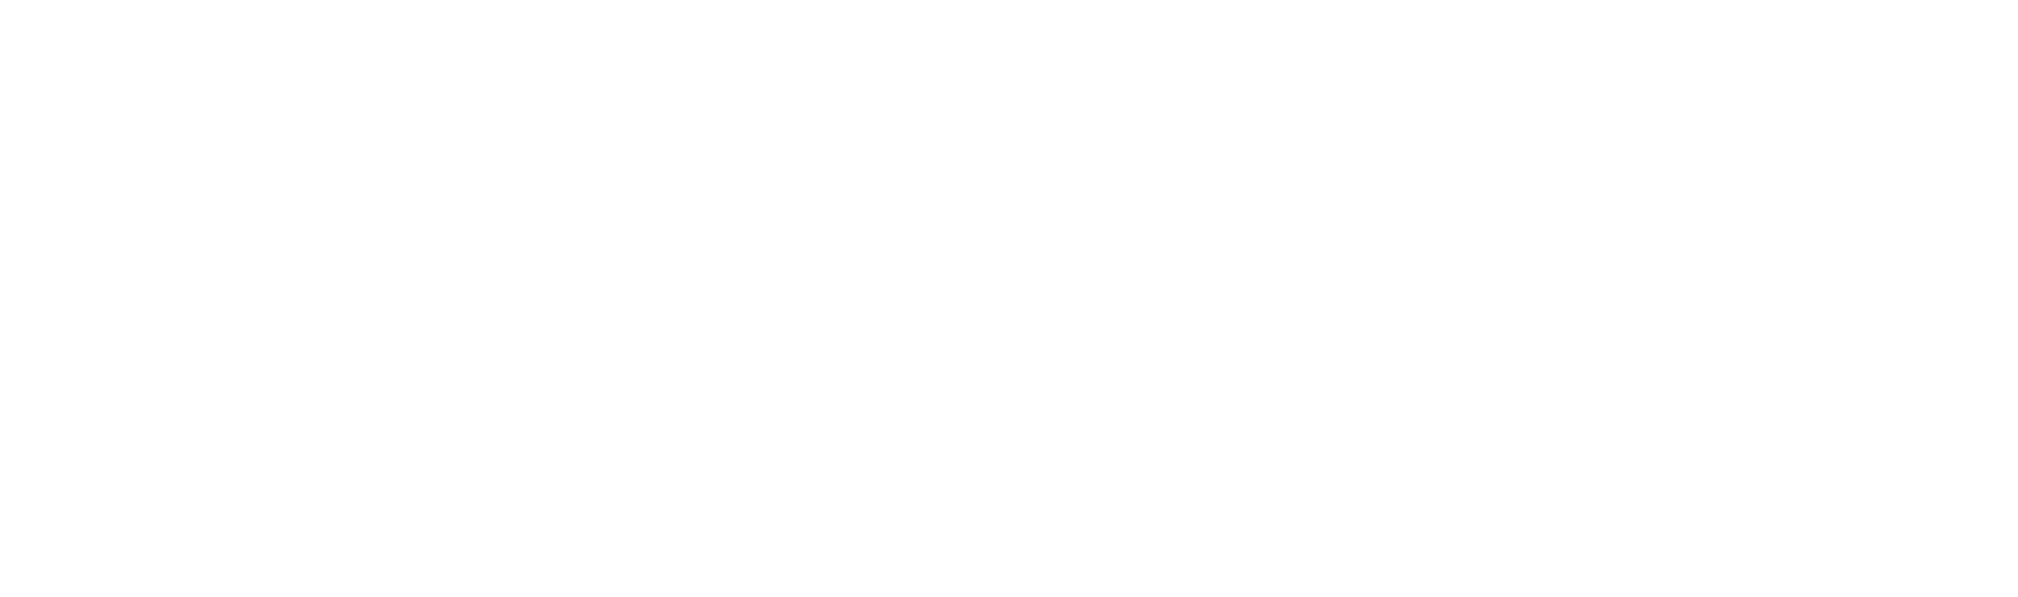 AVIS Logotype